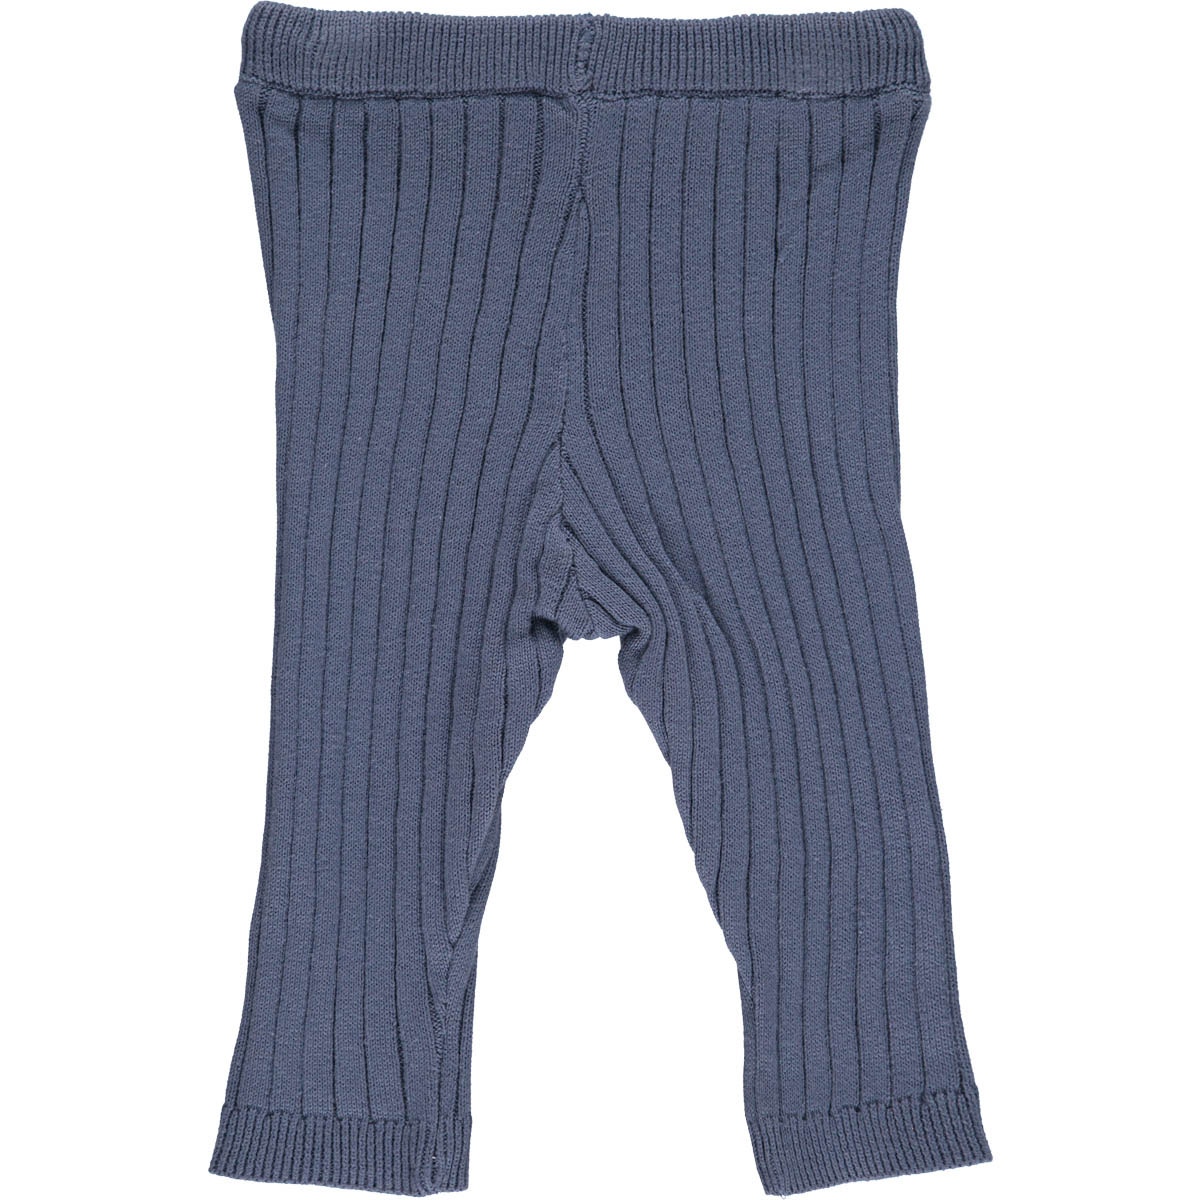 MAMA.LICIOUS müsli Knit trousers  -Indigo - 1539002900